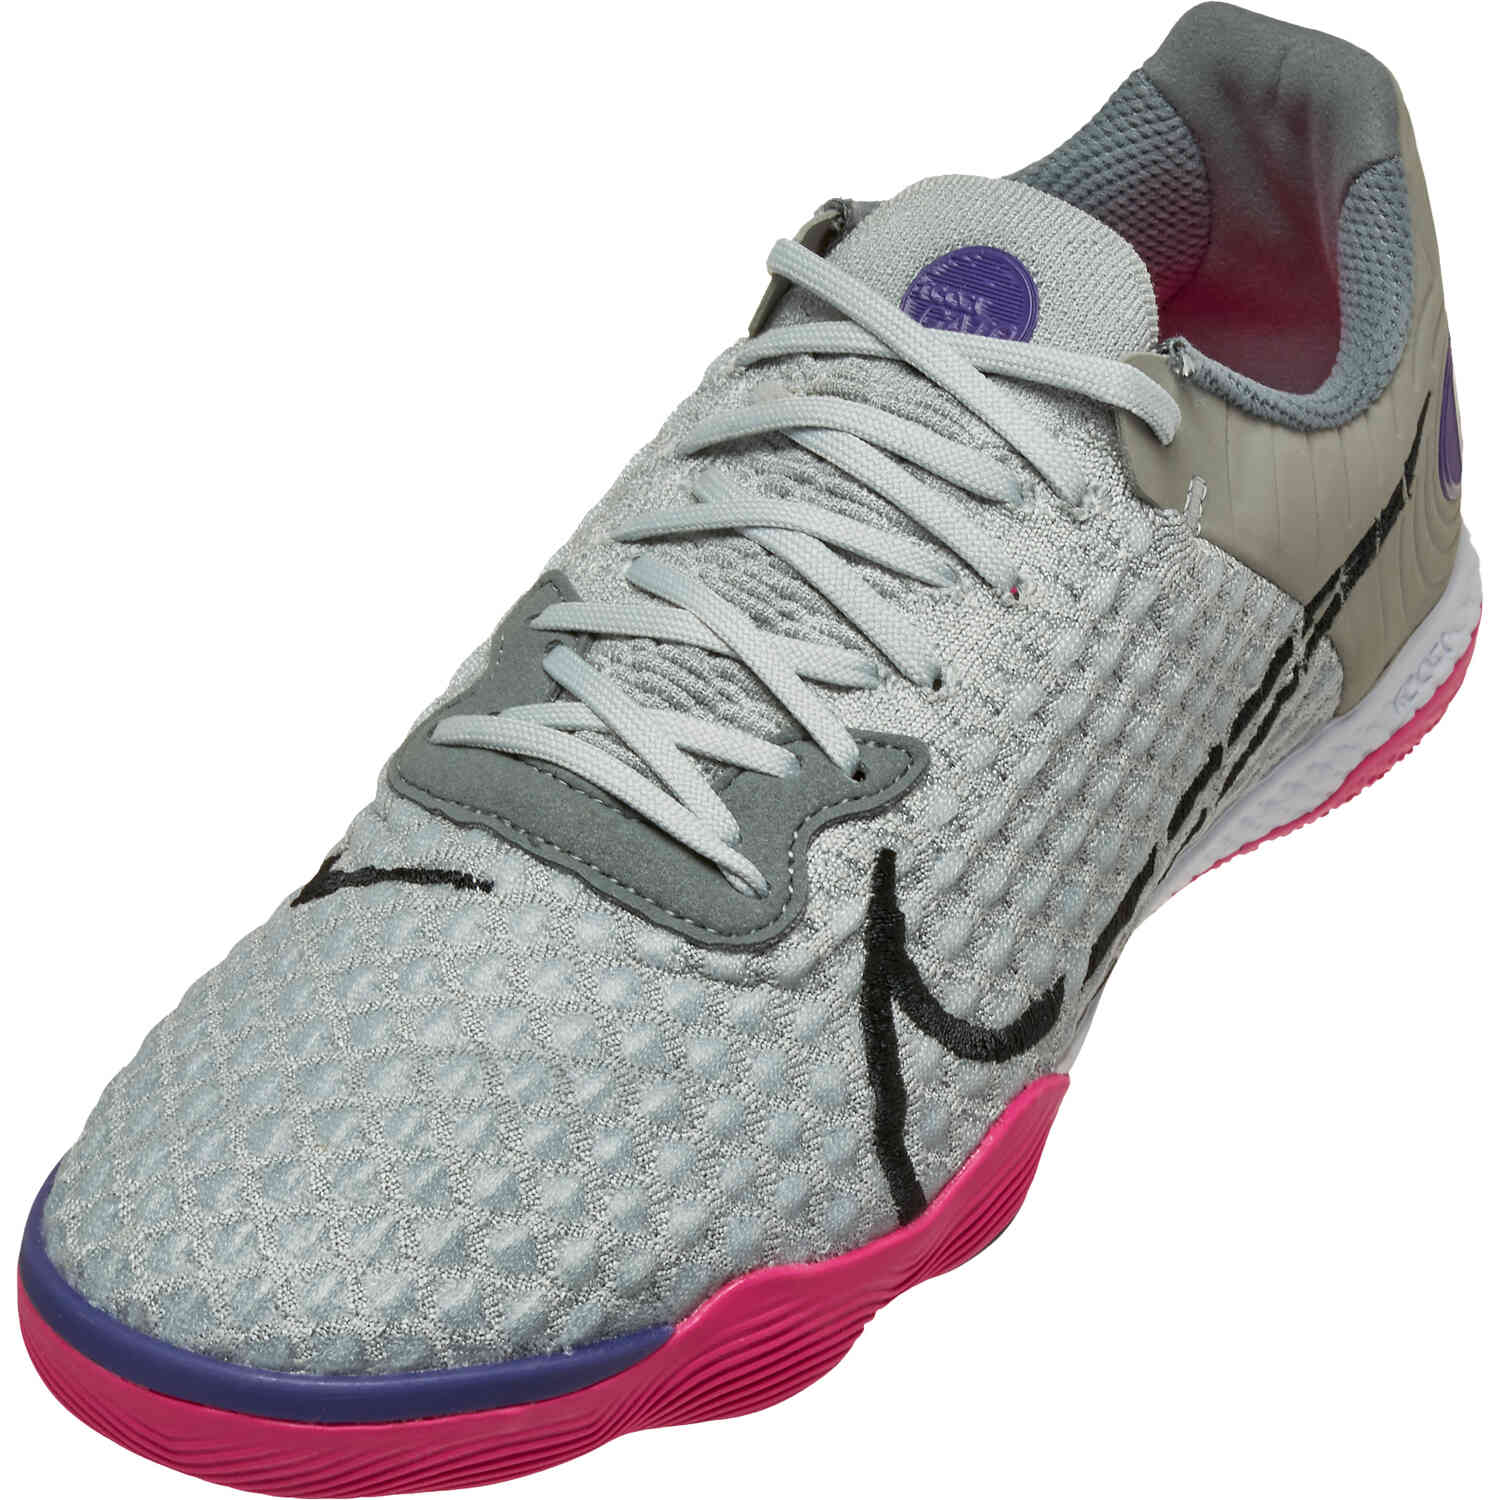 Nike React Gato IC Soccer Shoes - Light Grey, Black & Smoke Grey -